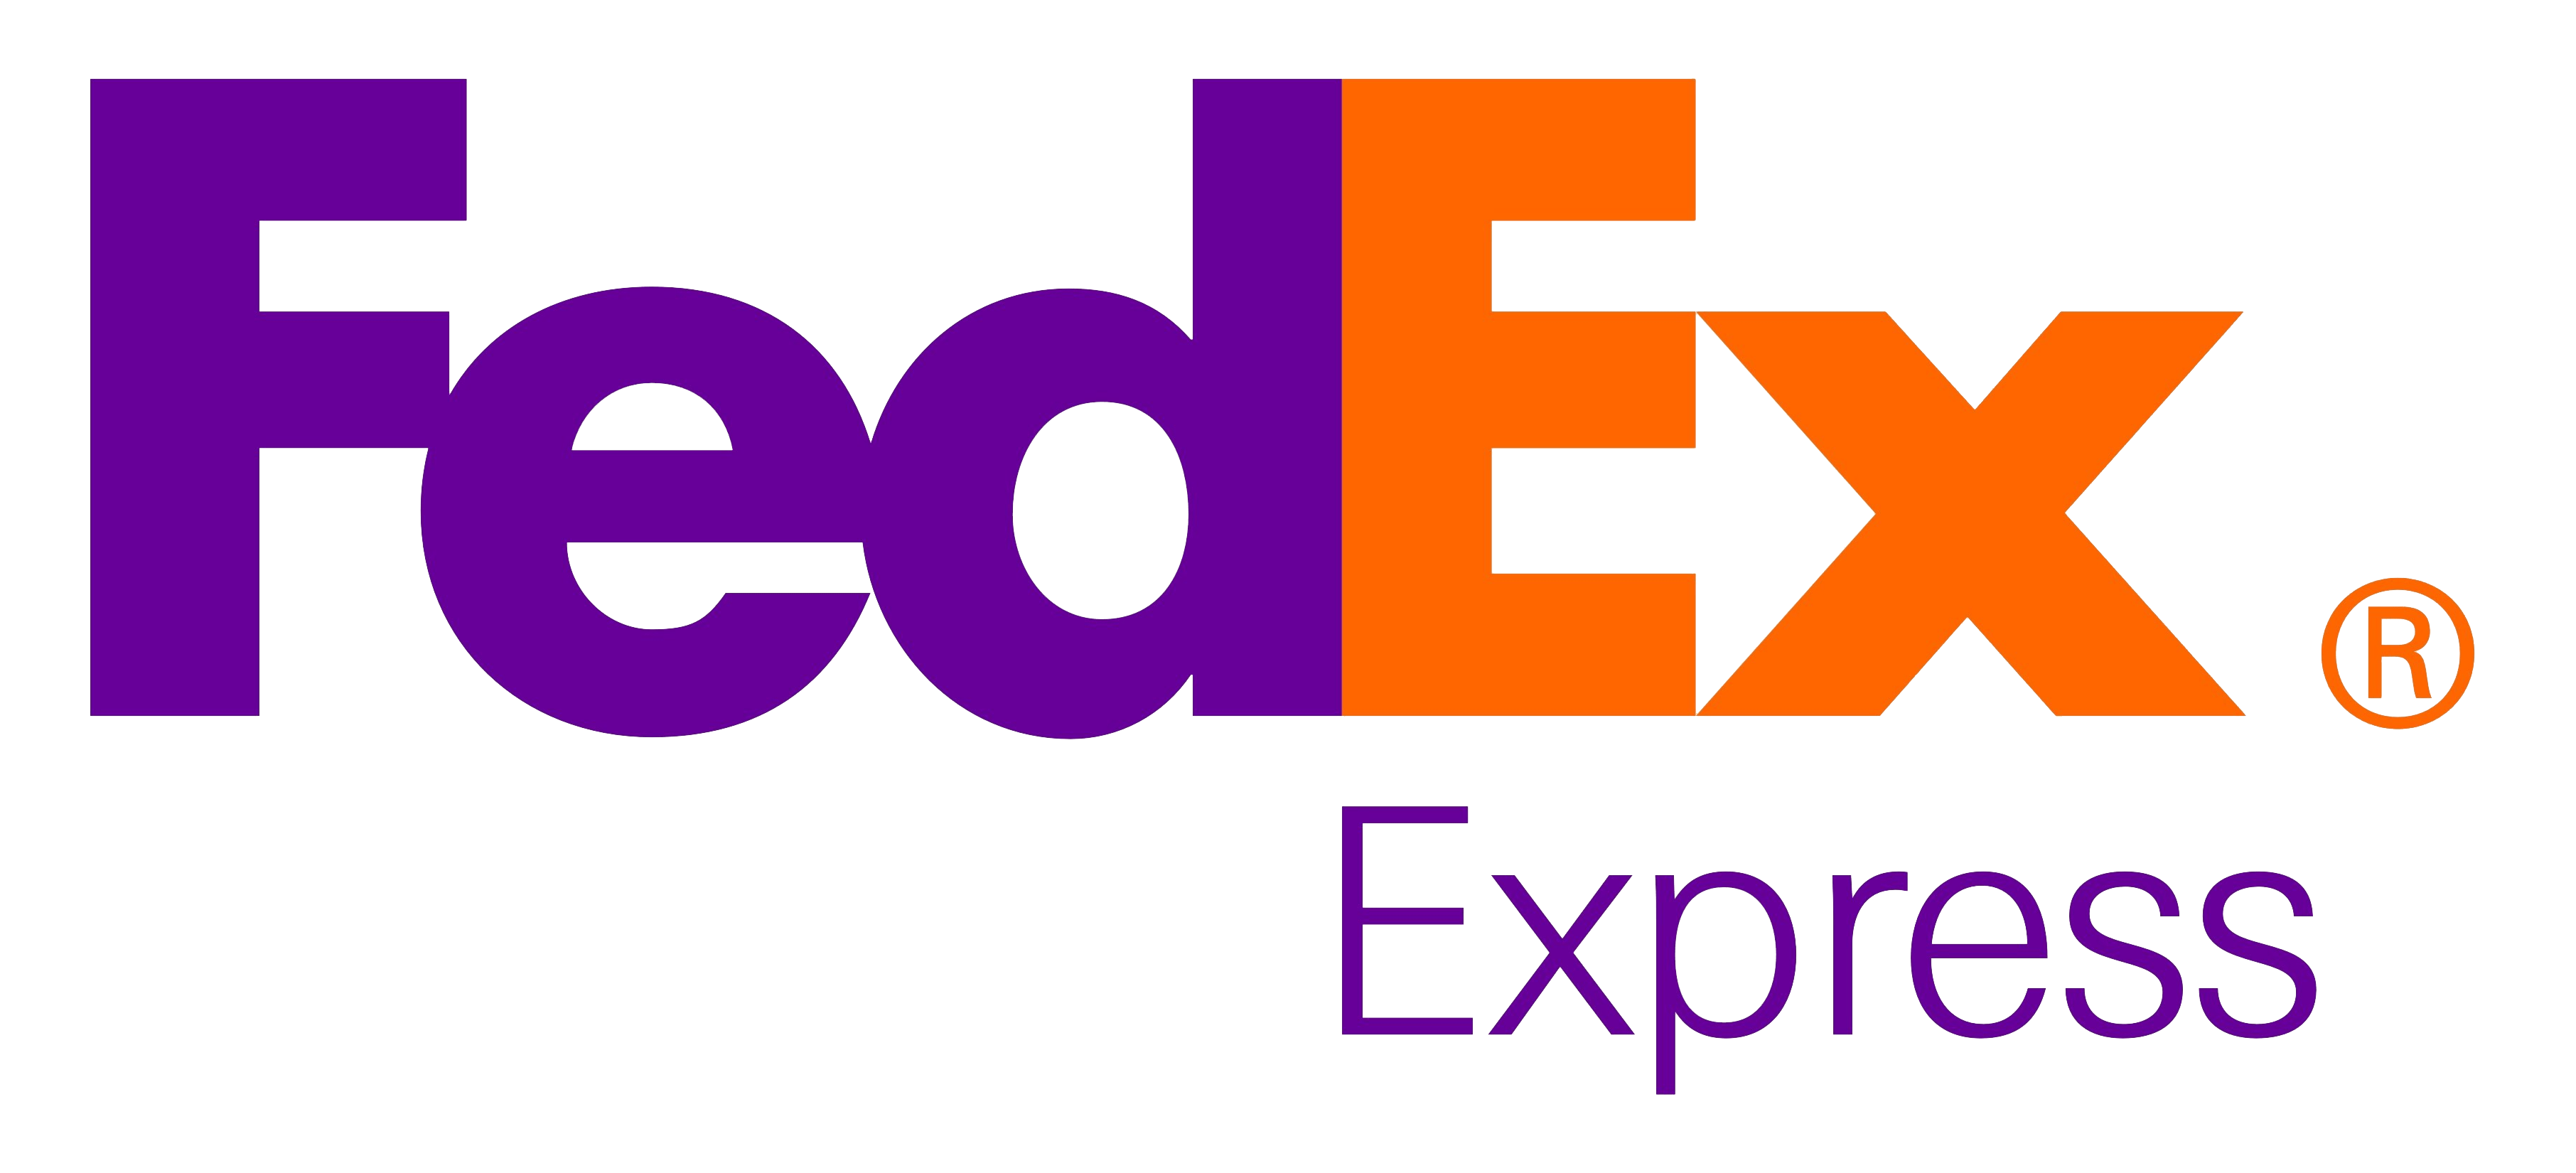 Express Brand Logo - FedEx Express Logo PNG Image - PurePNG | Free transparent CC0 PNG ...